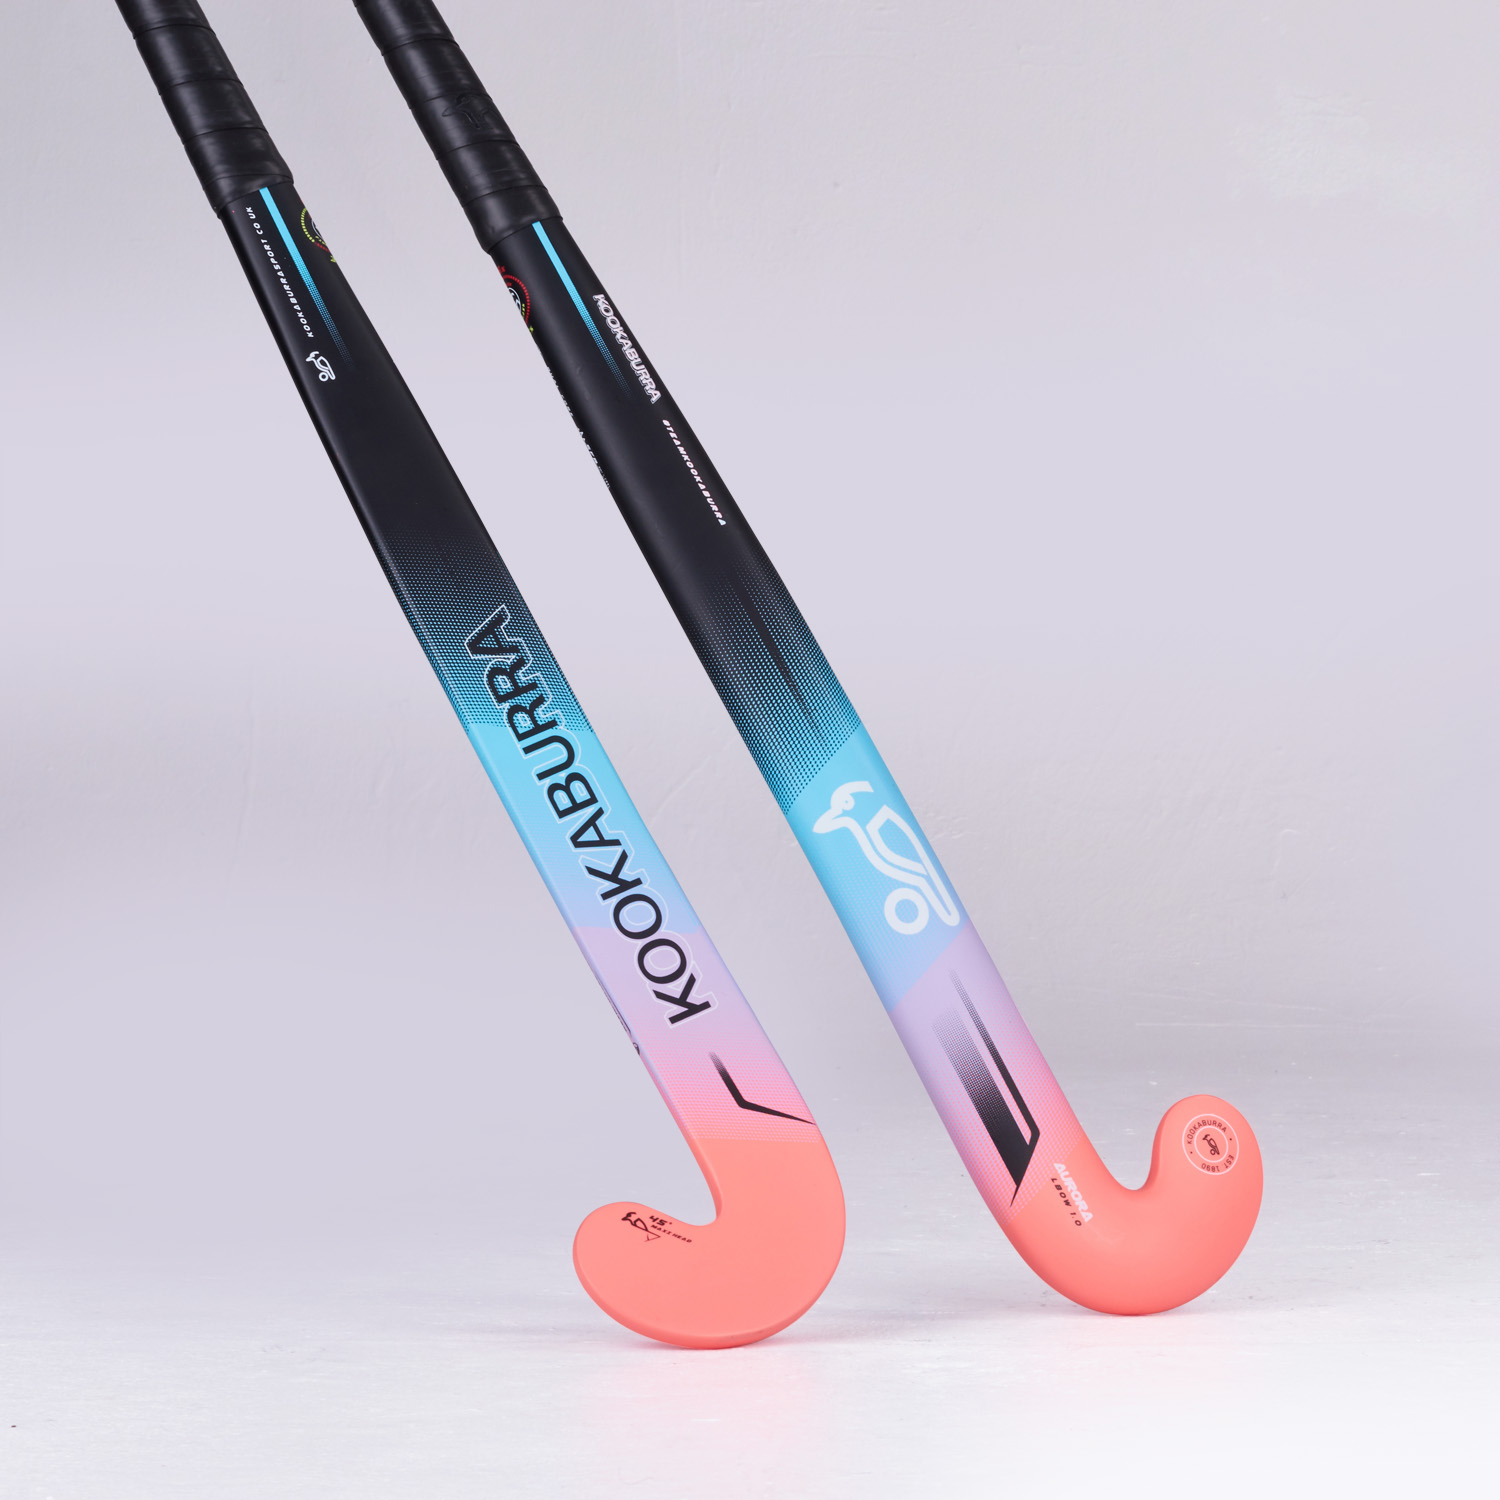 Kookaburra Aurora Hockey Stick